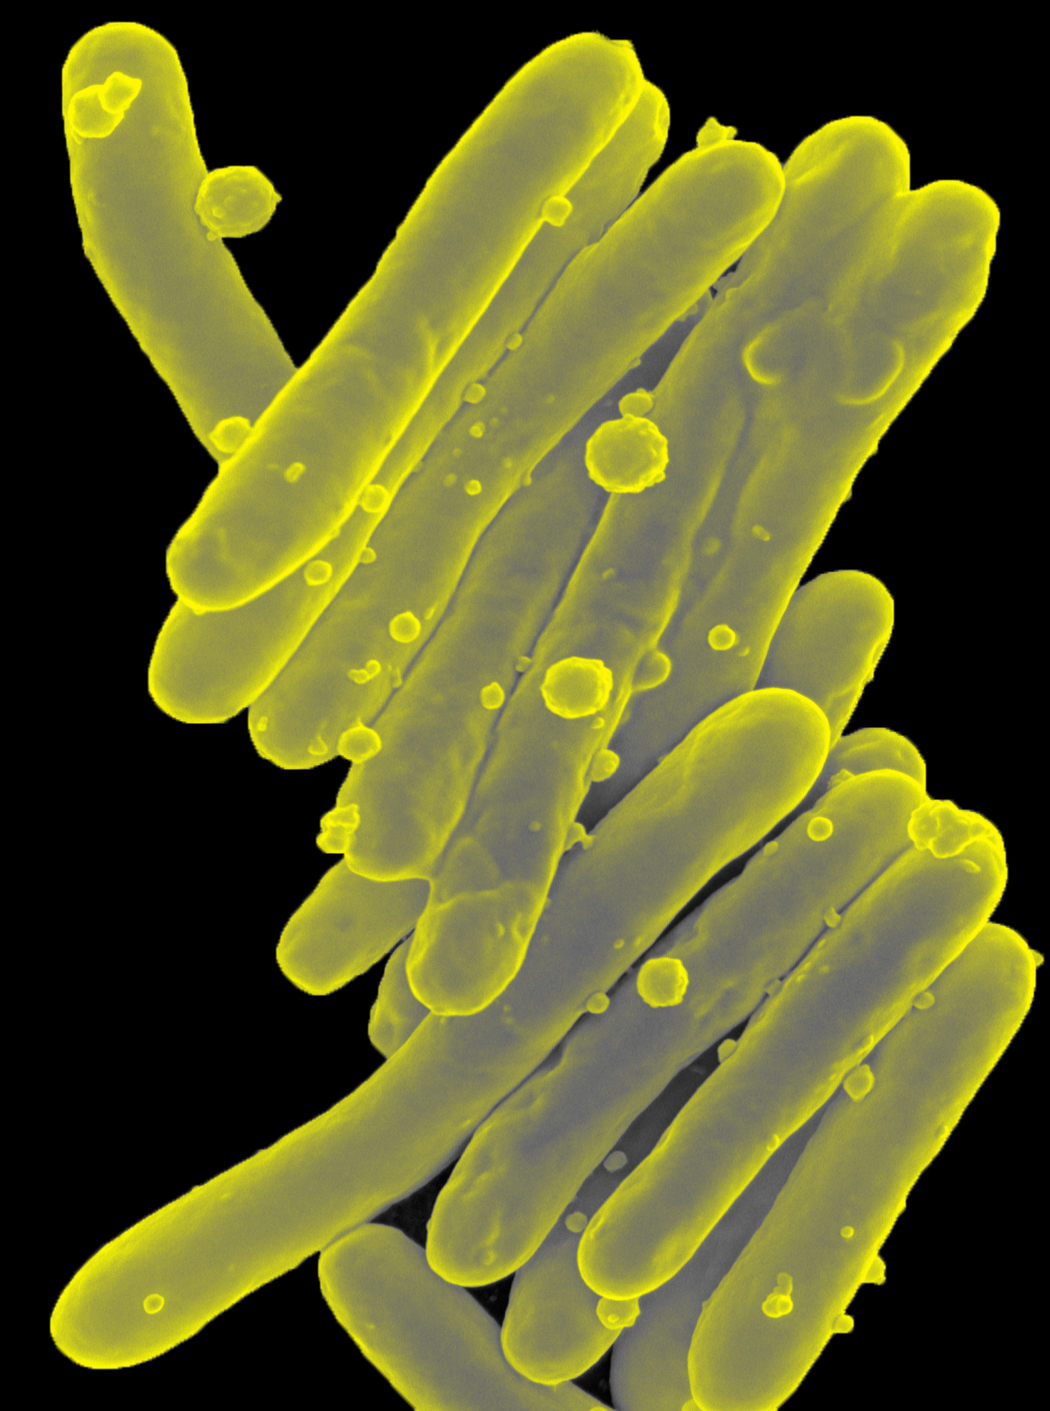 Microscopic image of a long, thin, rod-like bacteria